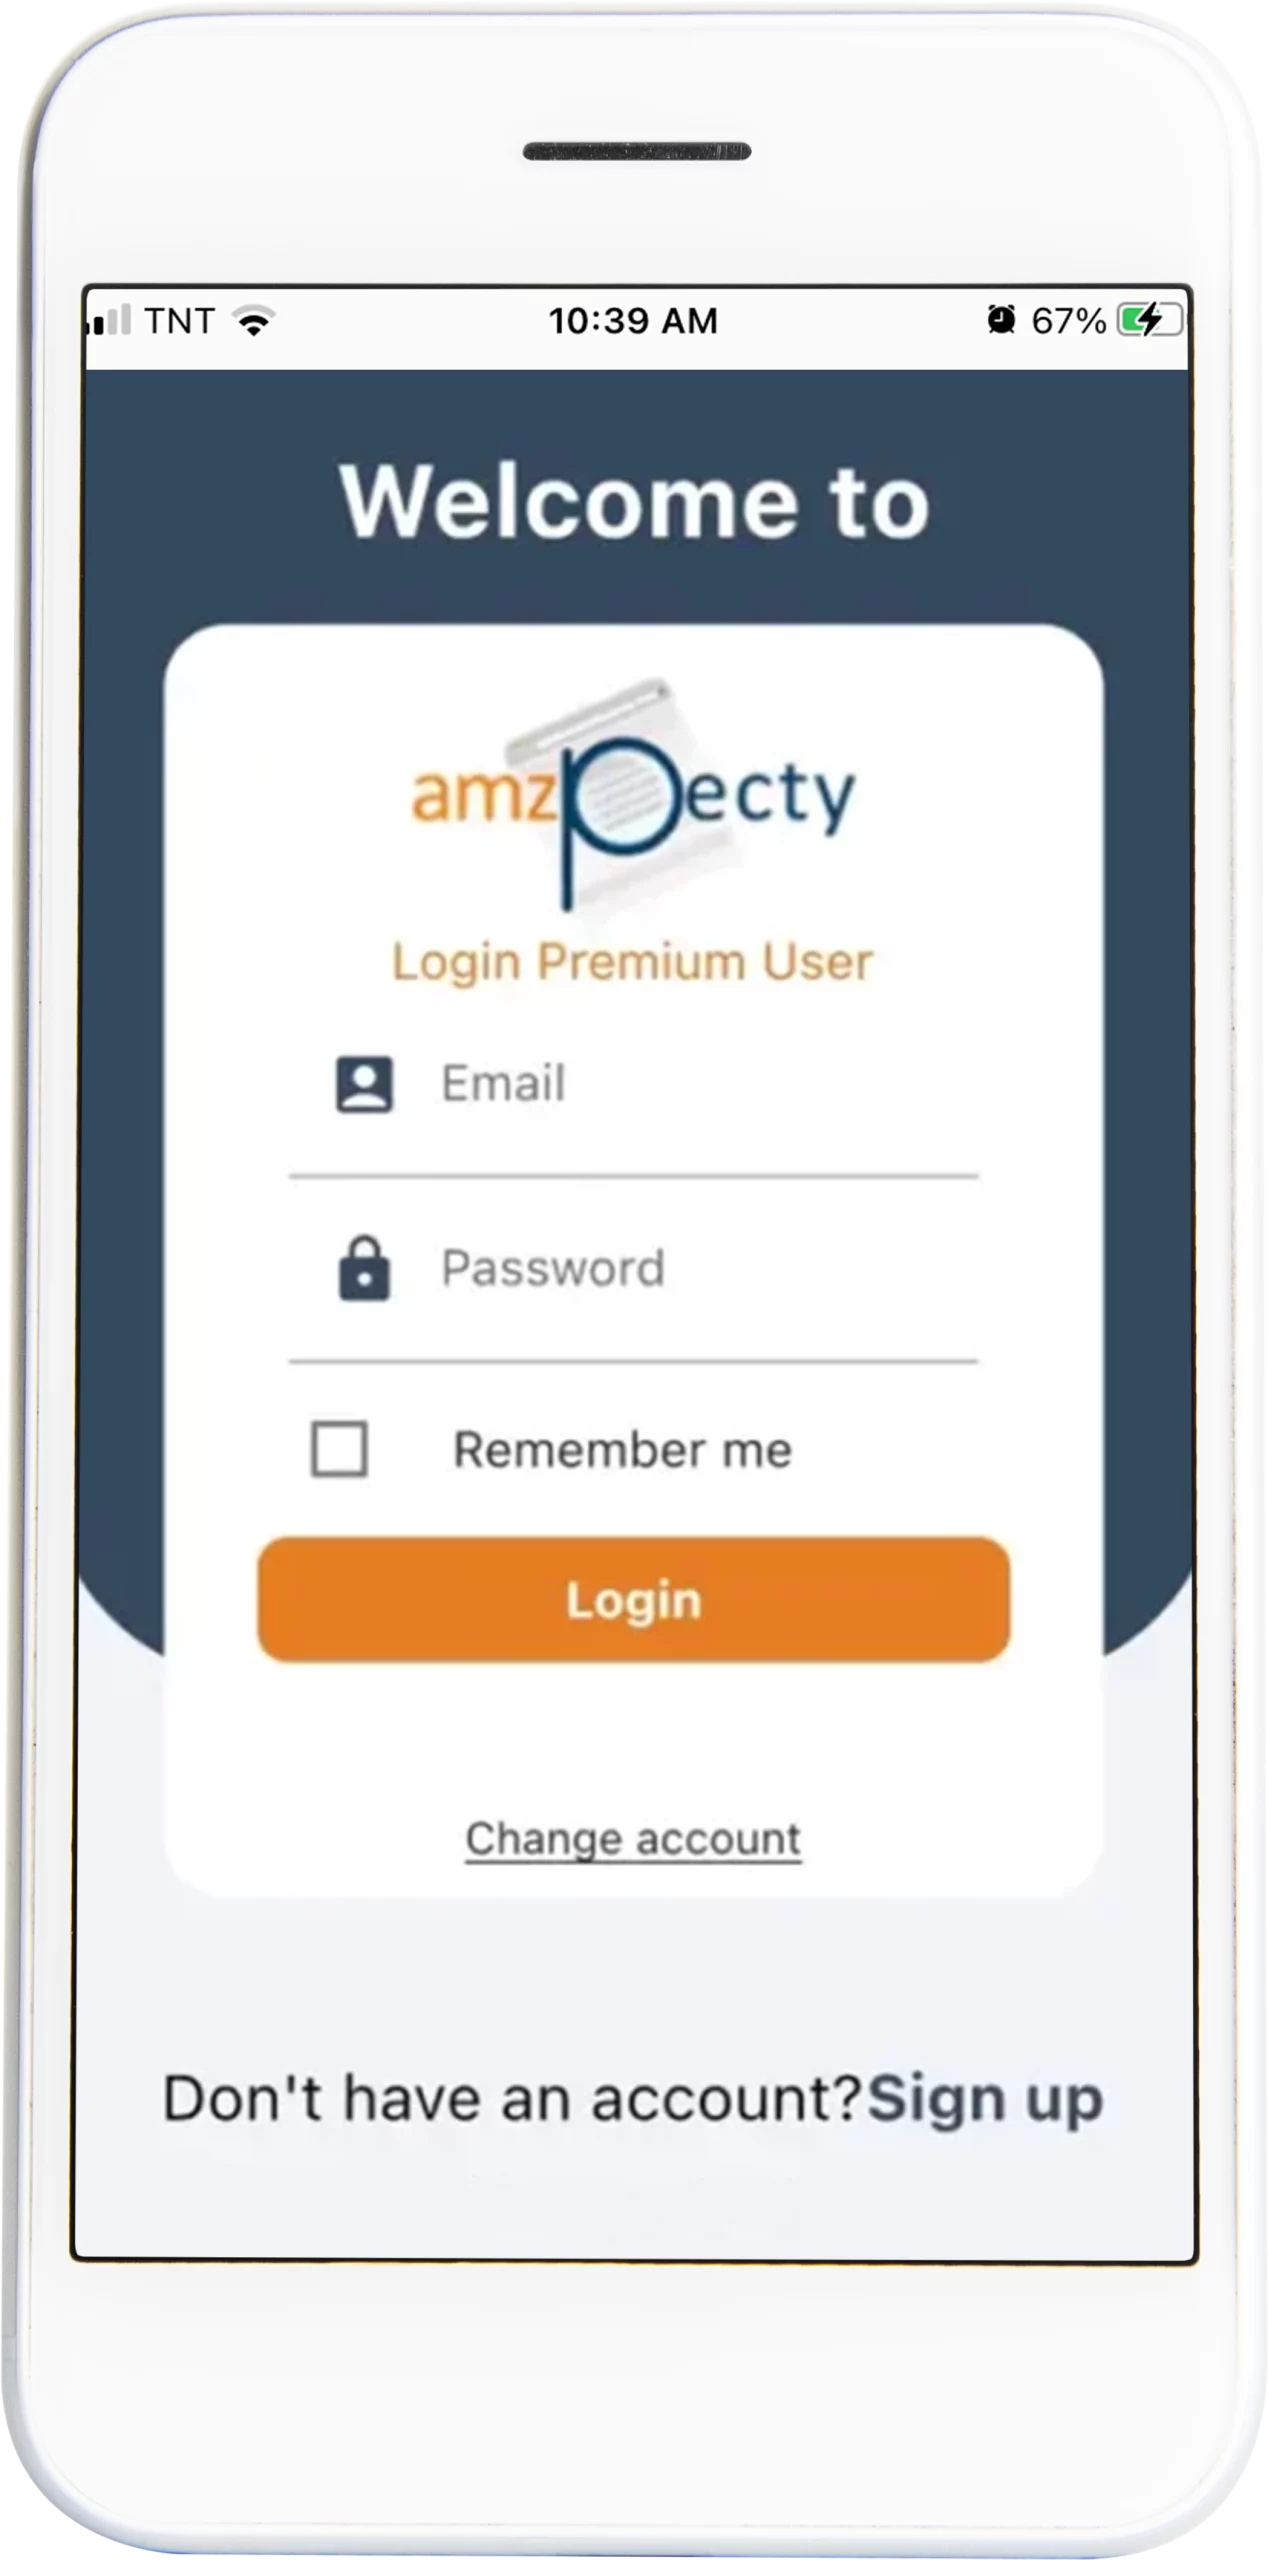 Amzpecty Mobile App